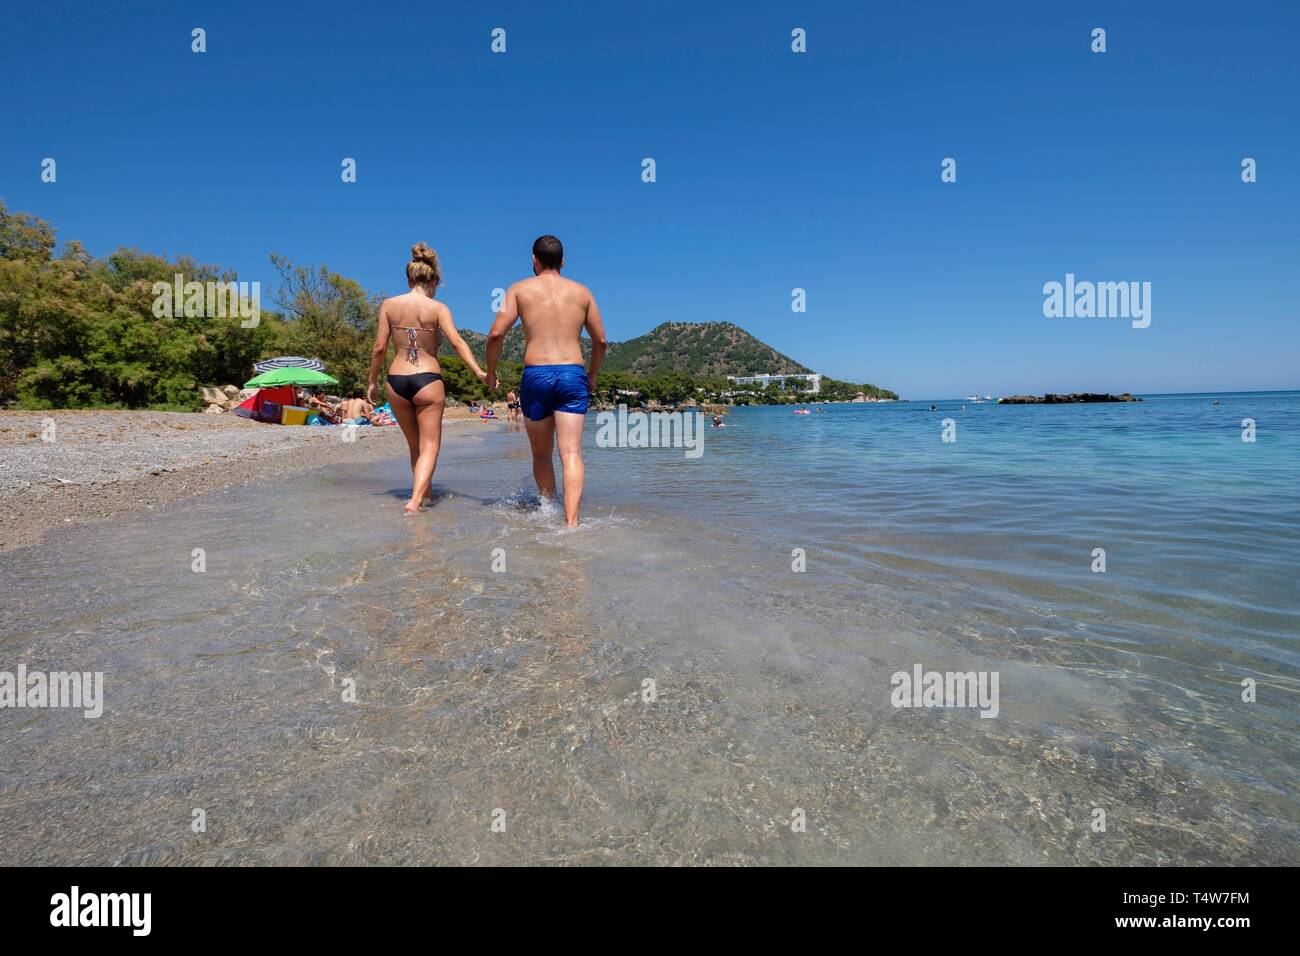 playa de Es Ribell, Cala sa Marjal, Costa de los Pinos, Son Servera, mallorca, balearic islands, spain. Stock Photo